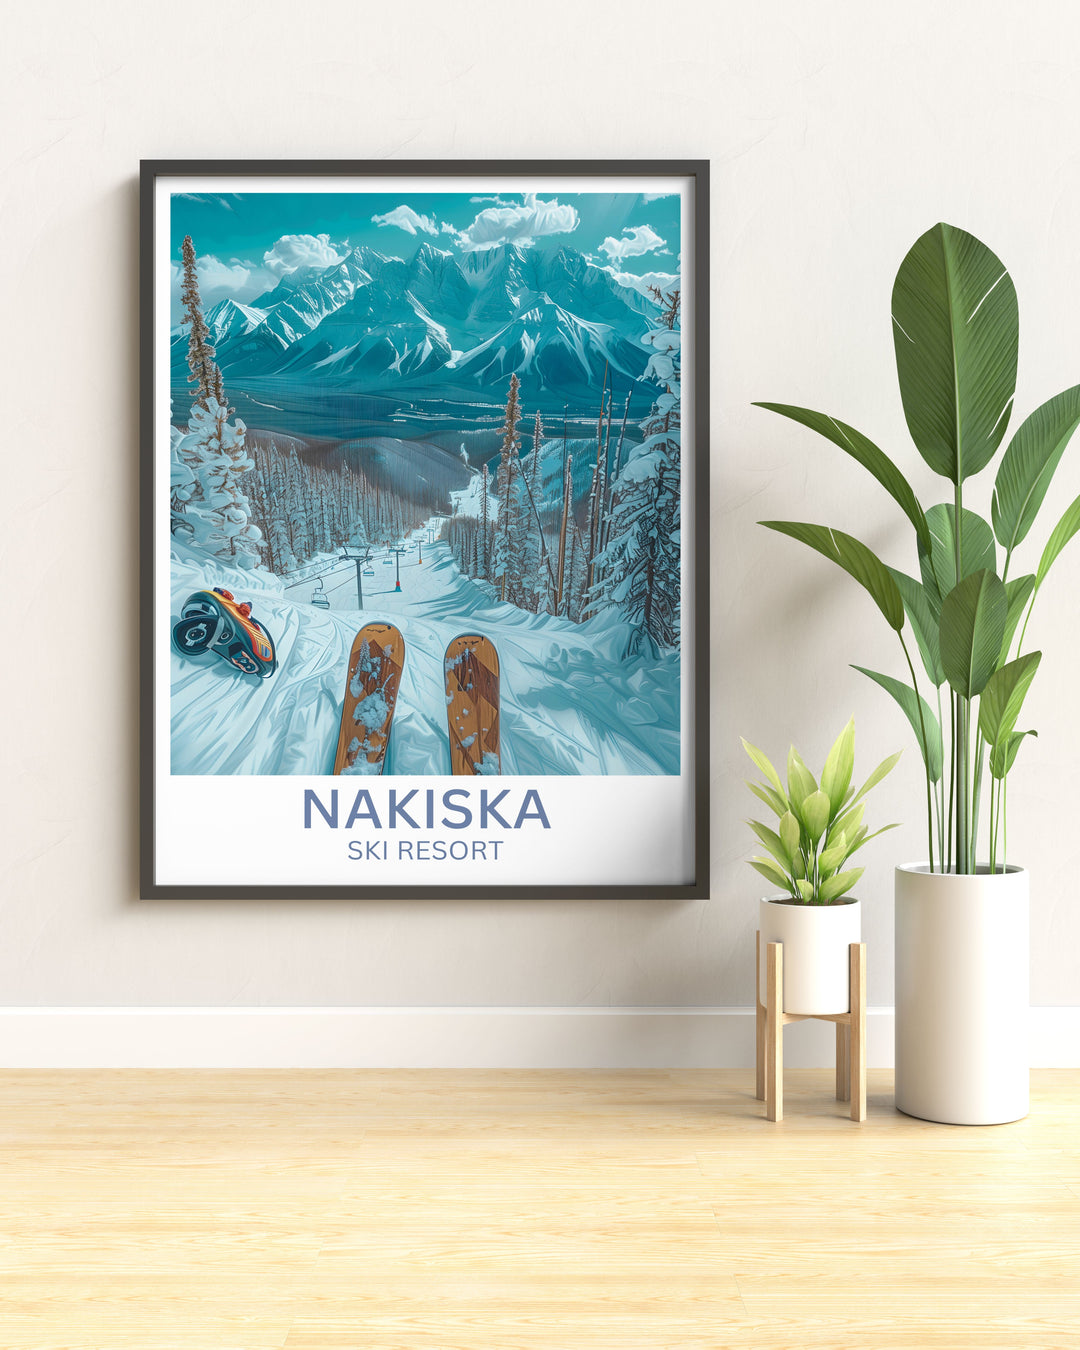 Vintage style poster of Nakiska Ski Resort, capturing the classic charm of skiing in Alberta.